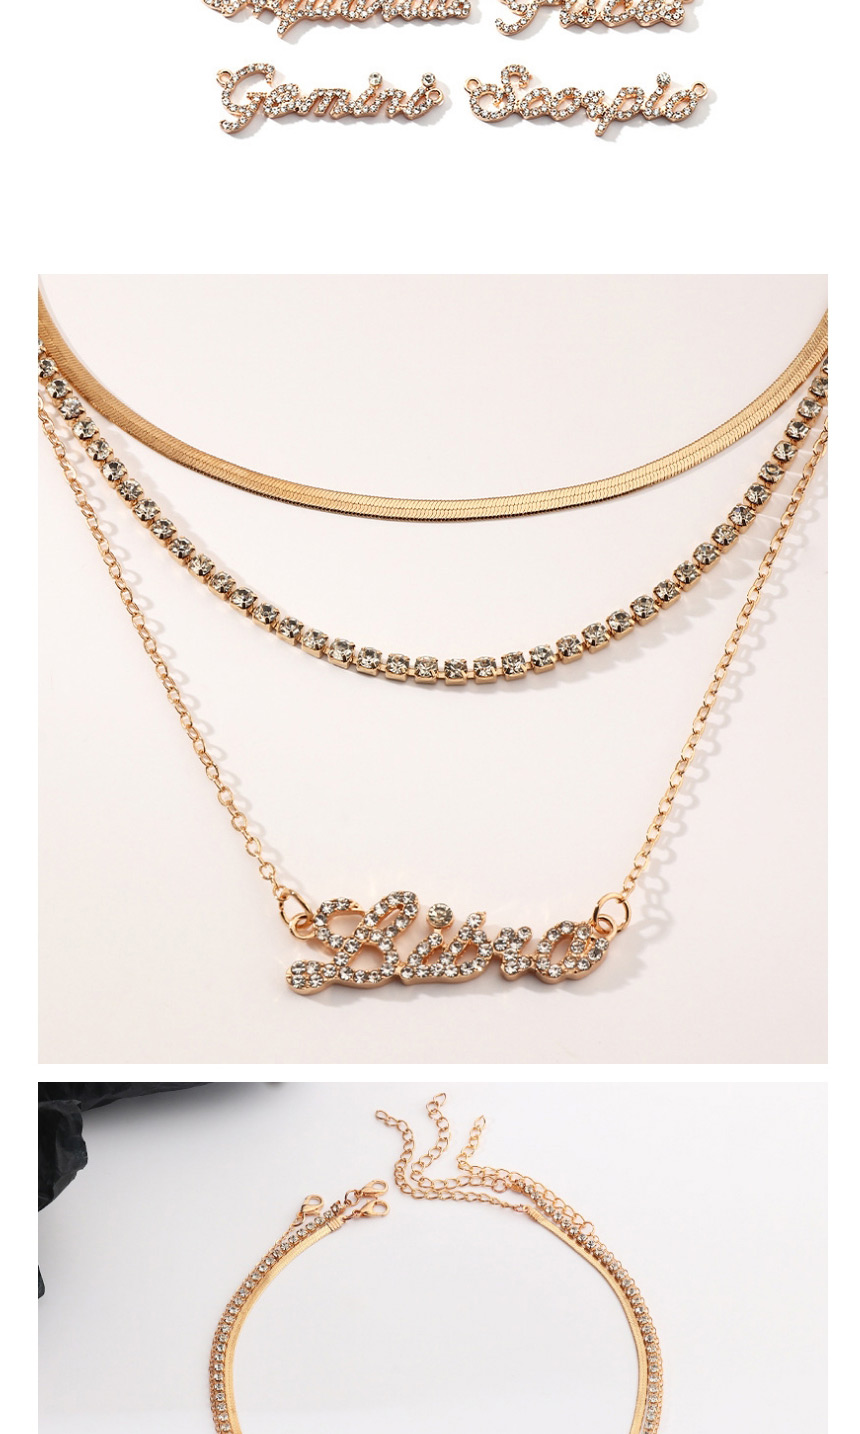 Fashion Aquarius Twelve Constellation Letters Multilayer Necklace With Diamonds,Pendants